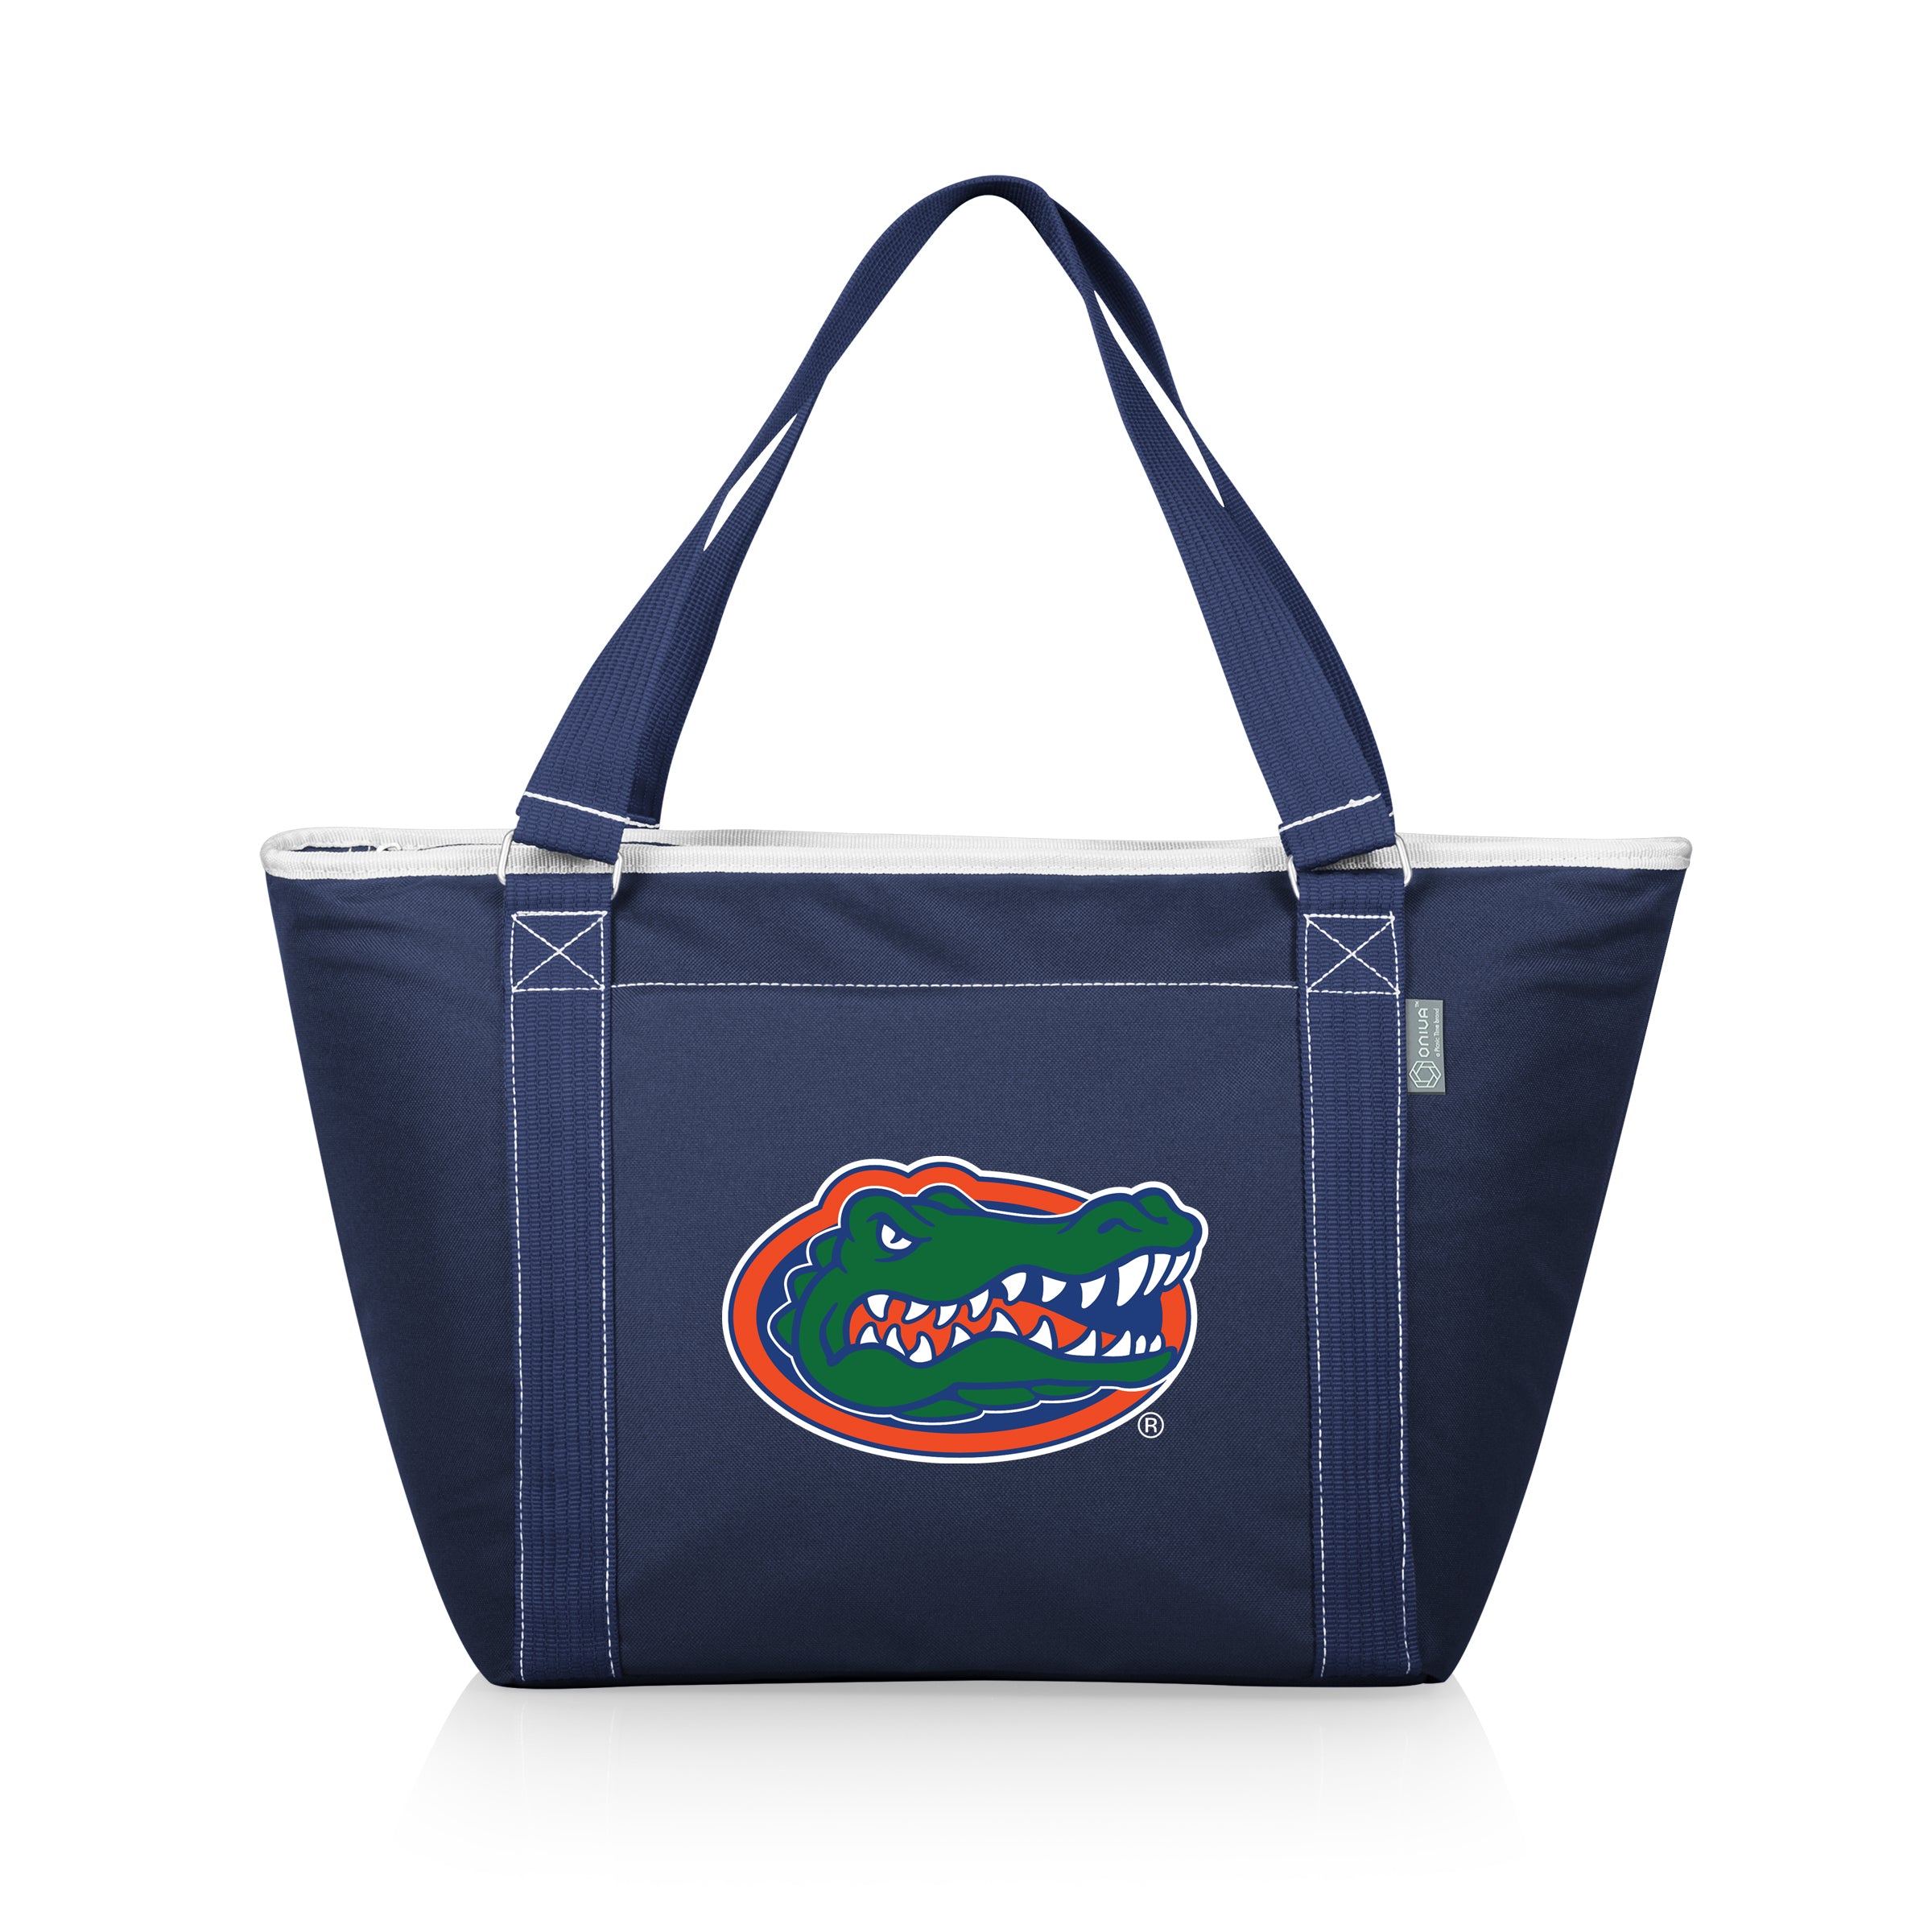 Florida Gators - Topanga Cooler Tote Bag